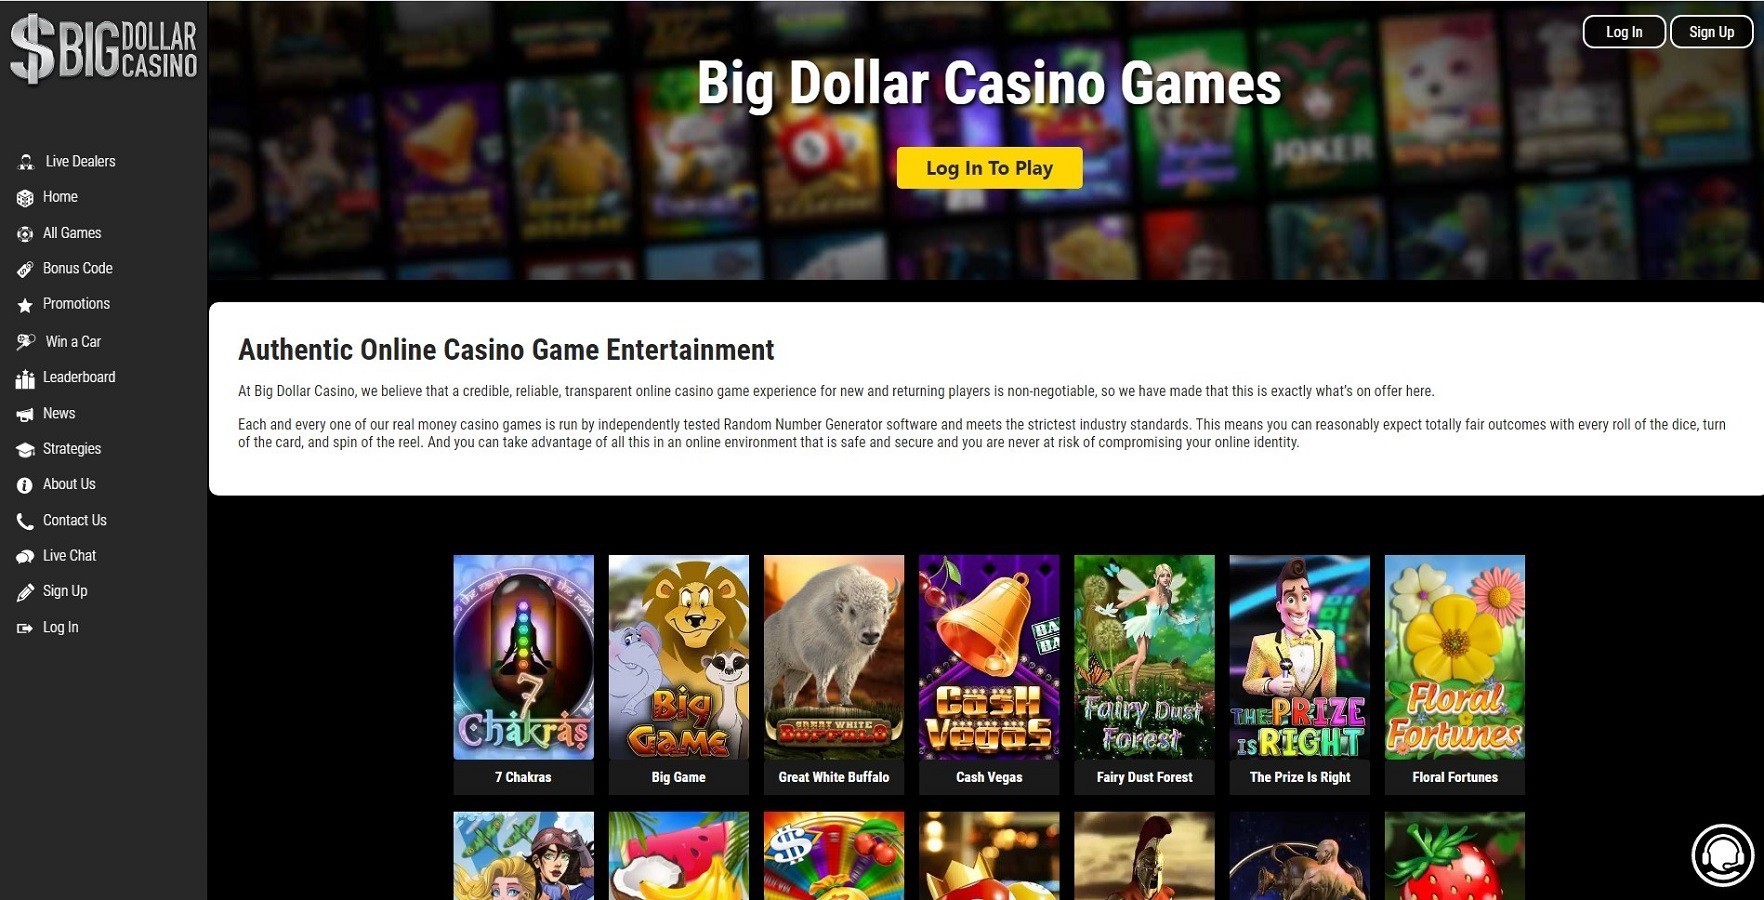 Games And Providers At Betbigdollar Casino